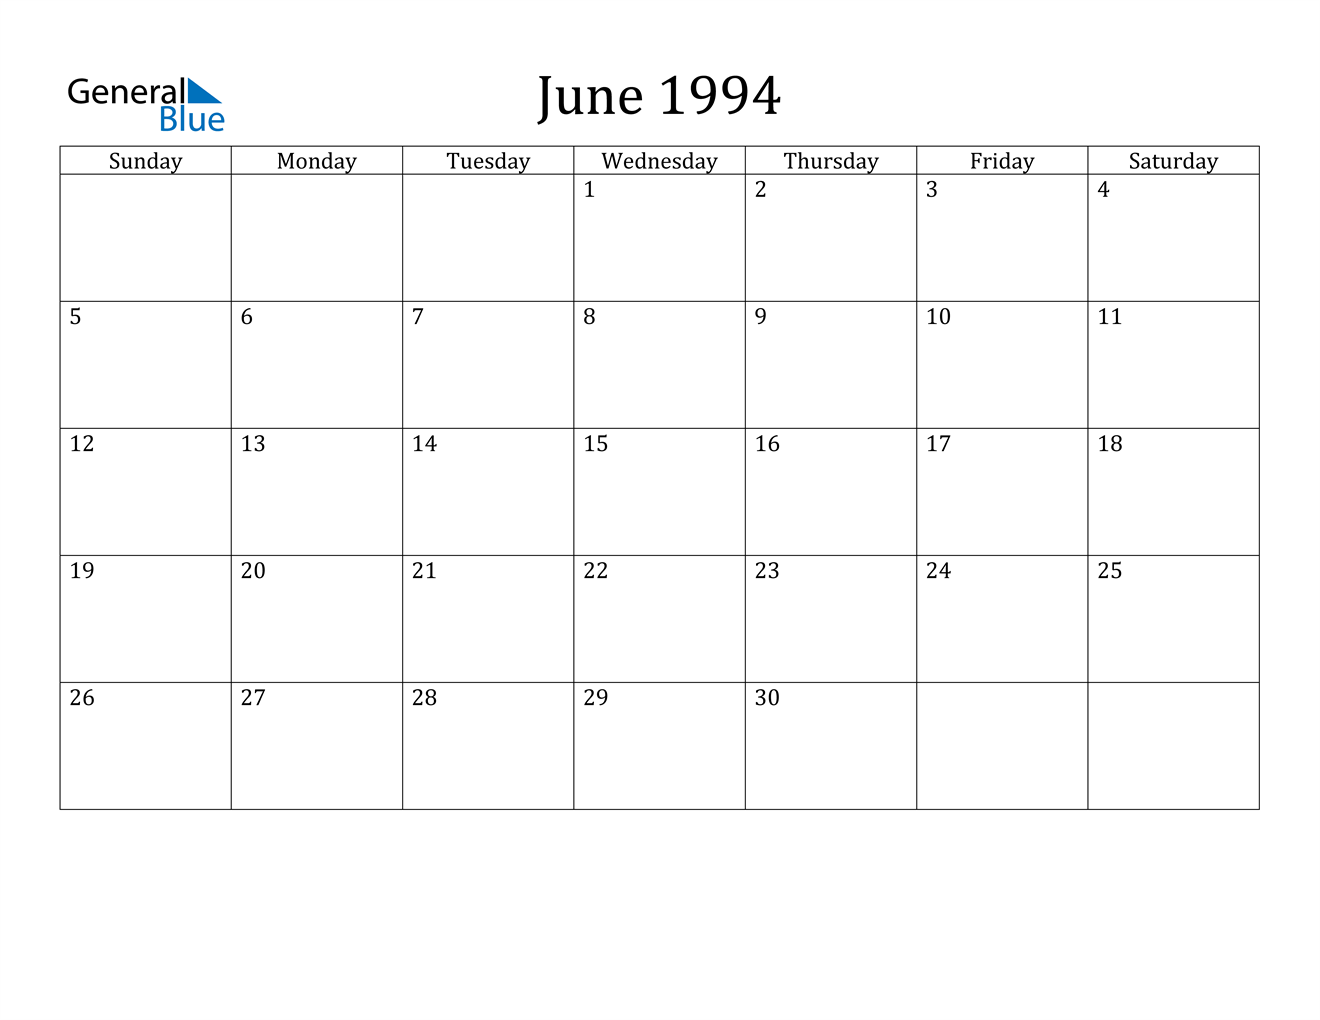 Malayalam Calendar 1994 June